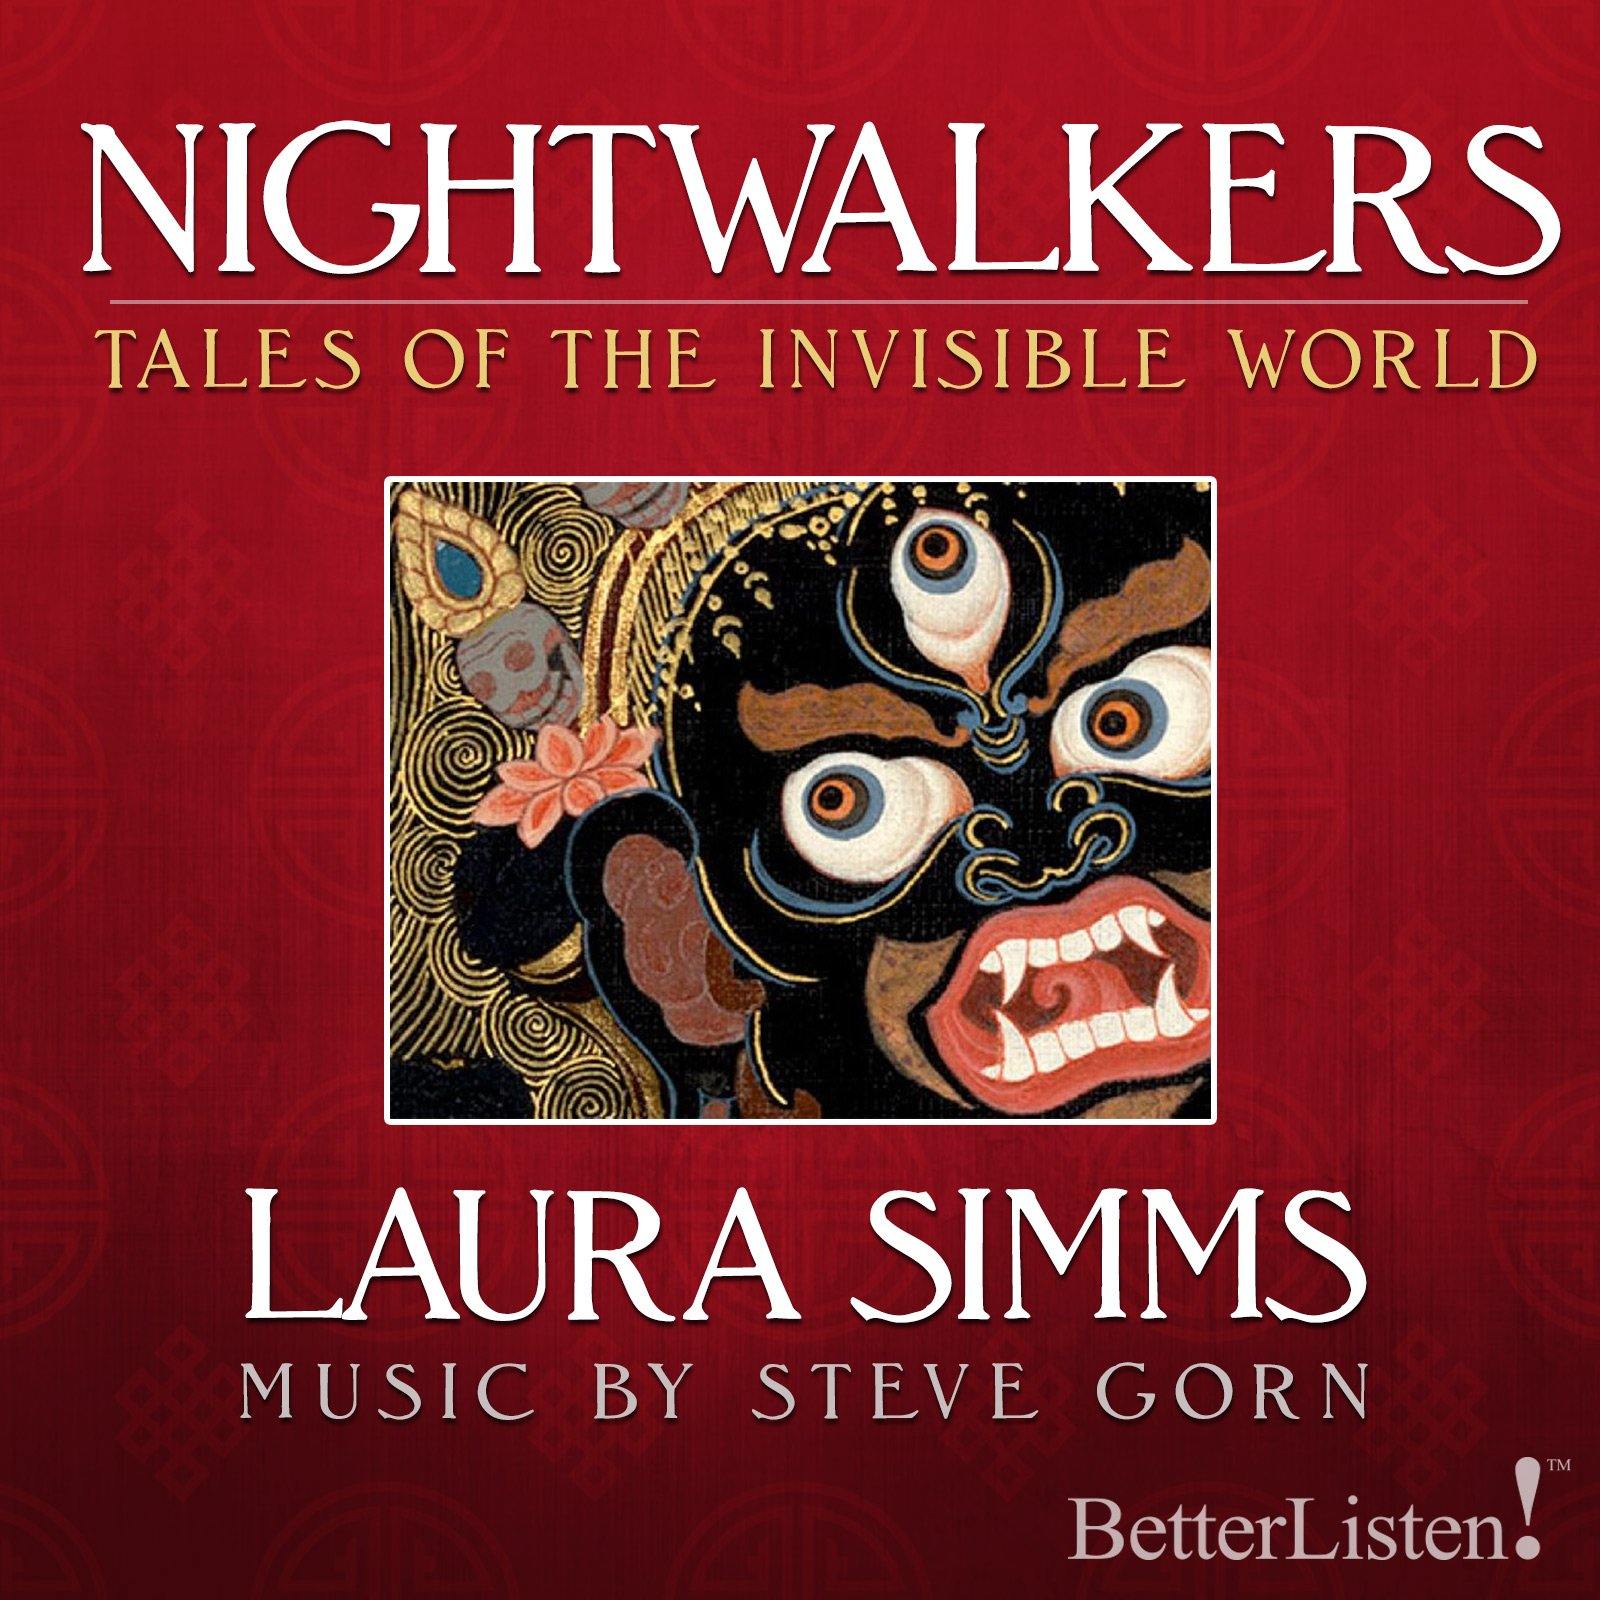 Nightwalkers: Tales of The Invisible World by Laura Simms Audio Program BetterListen! - BetterListen!